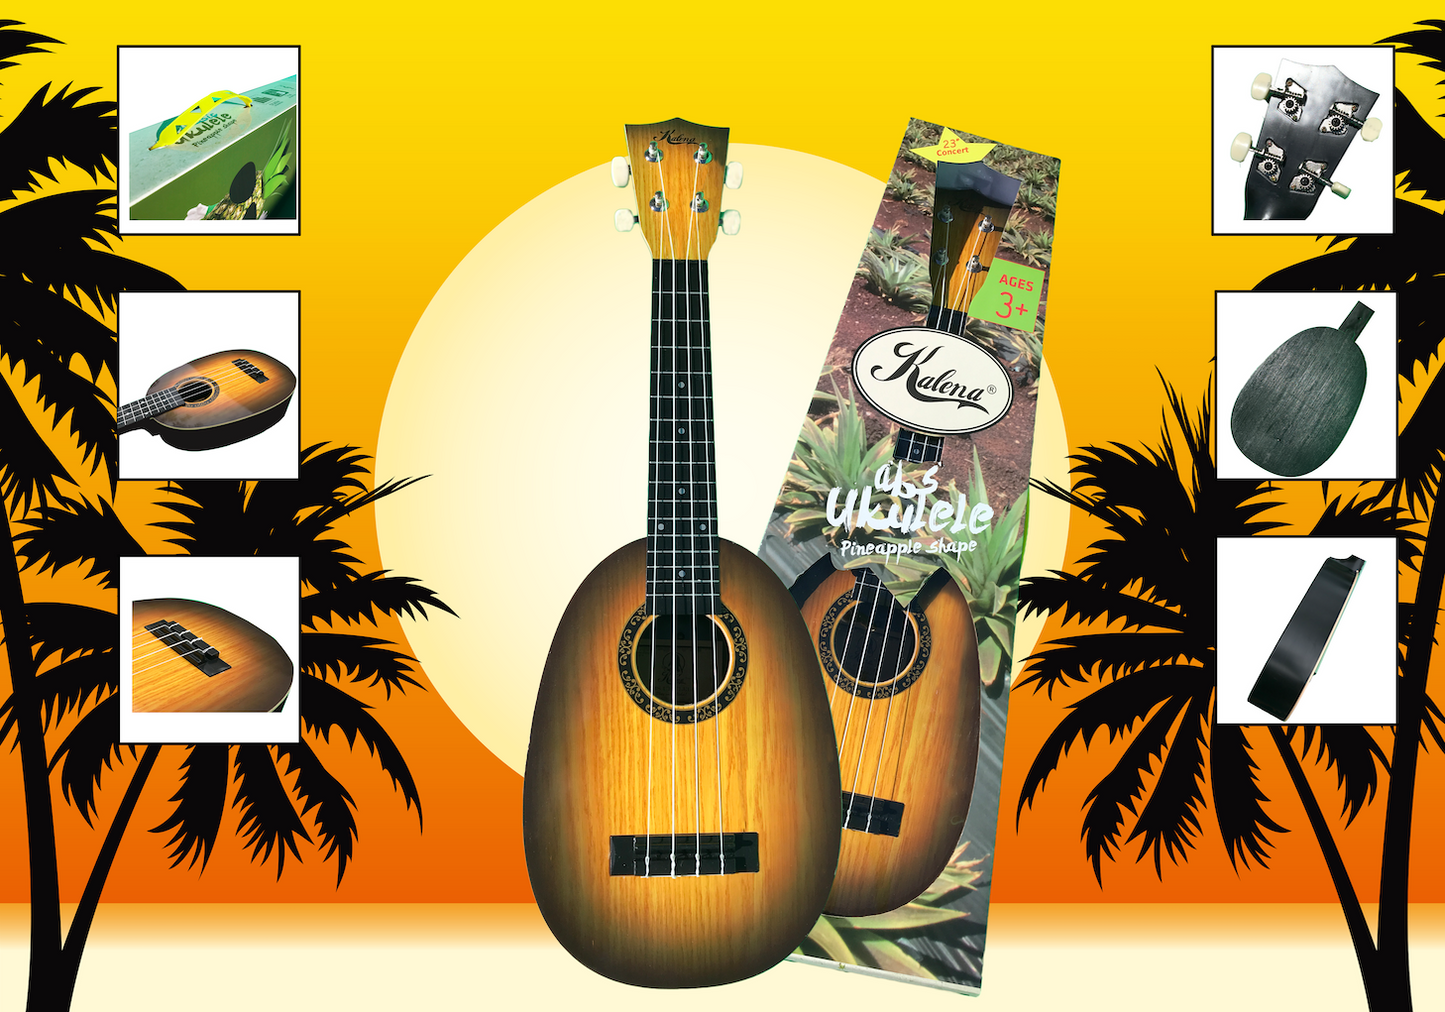 Kalena ABS Pineapple 23” Concert Ukulele with padded case - Kalena Instruments / Sunburst ABS